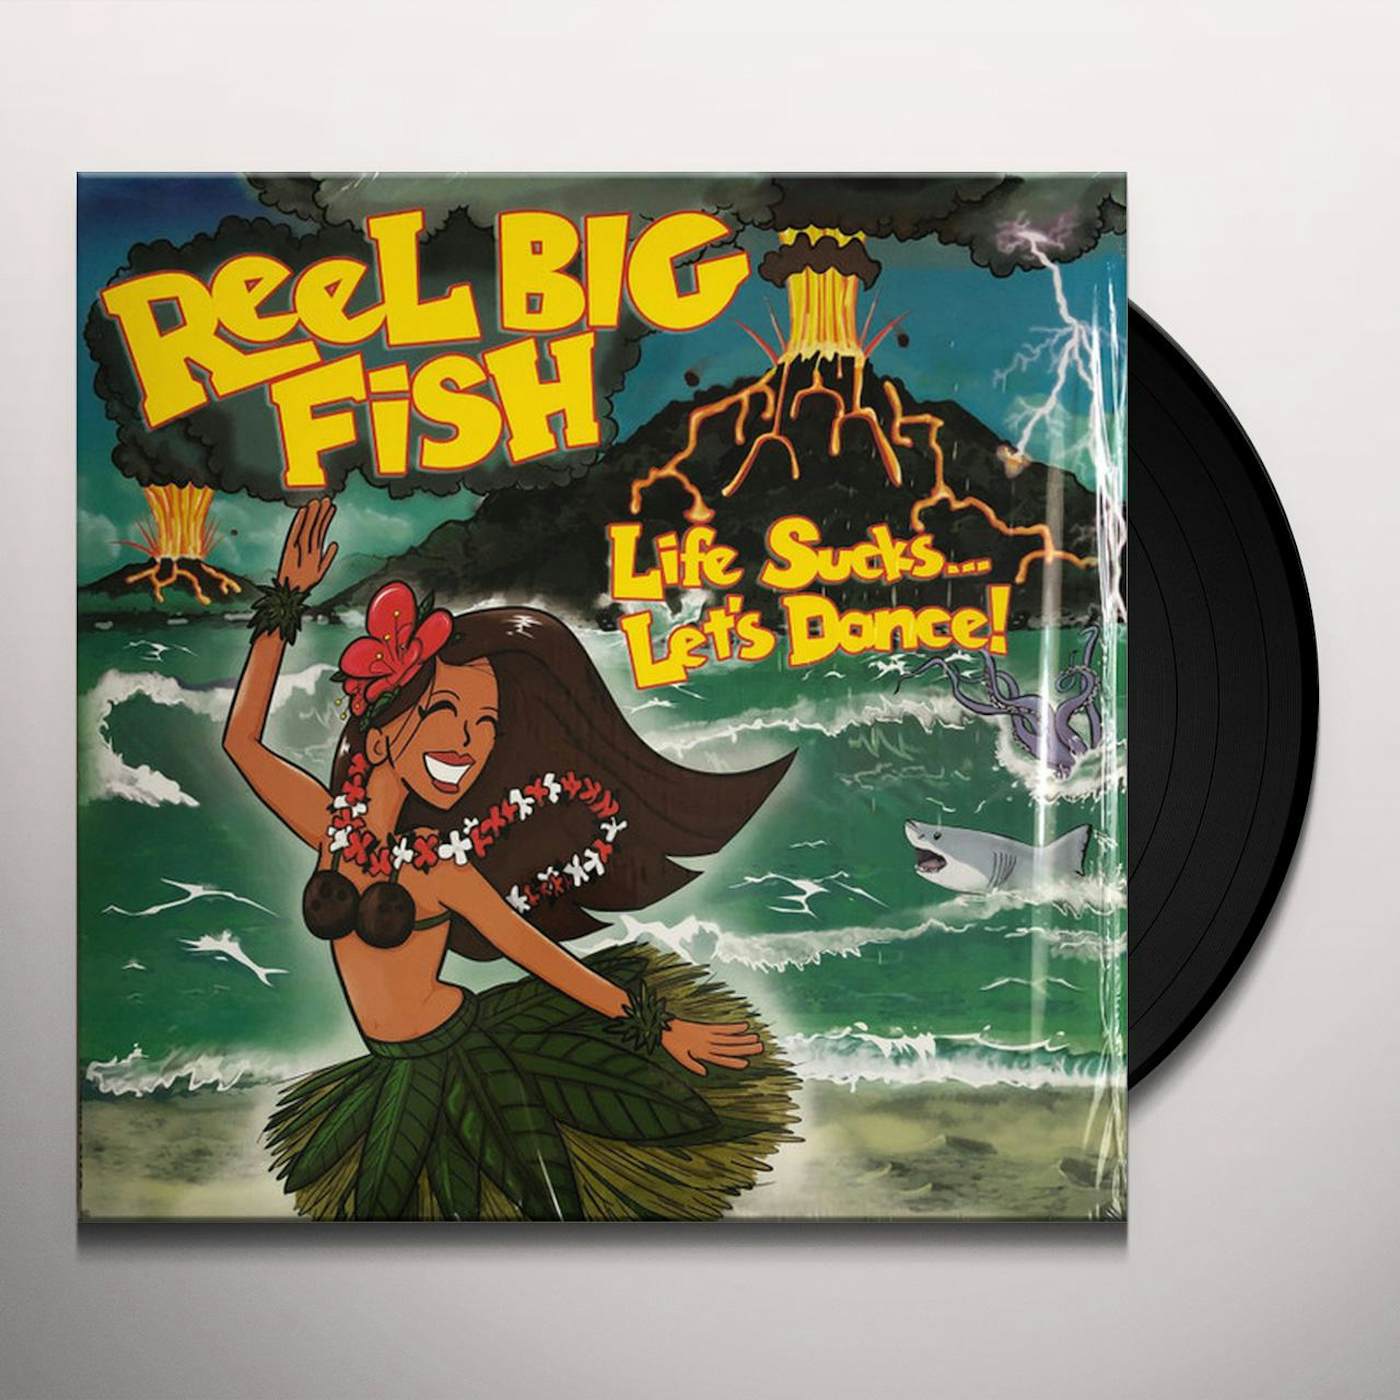 LIFE SUCKS LET'S DANCE Vinyl Record - Reel Big Fish